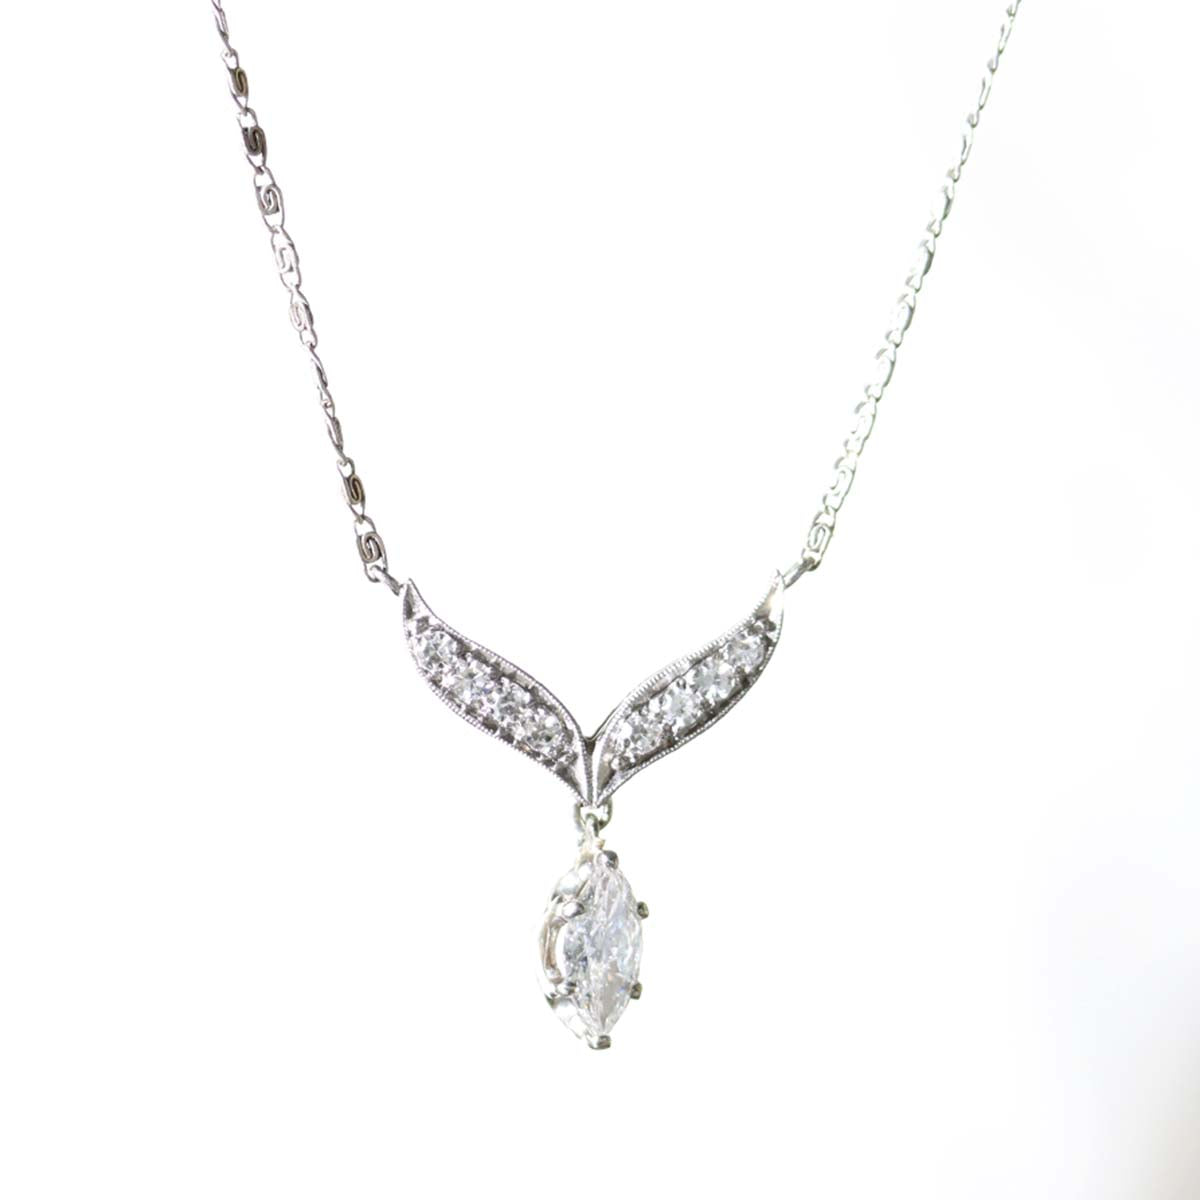 Circa 1950s Marquise Diamond Necklace #VP230327